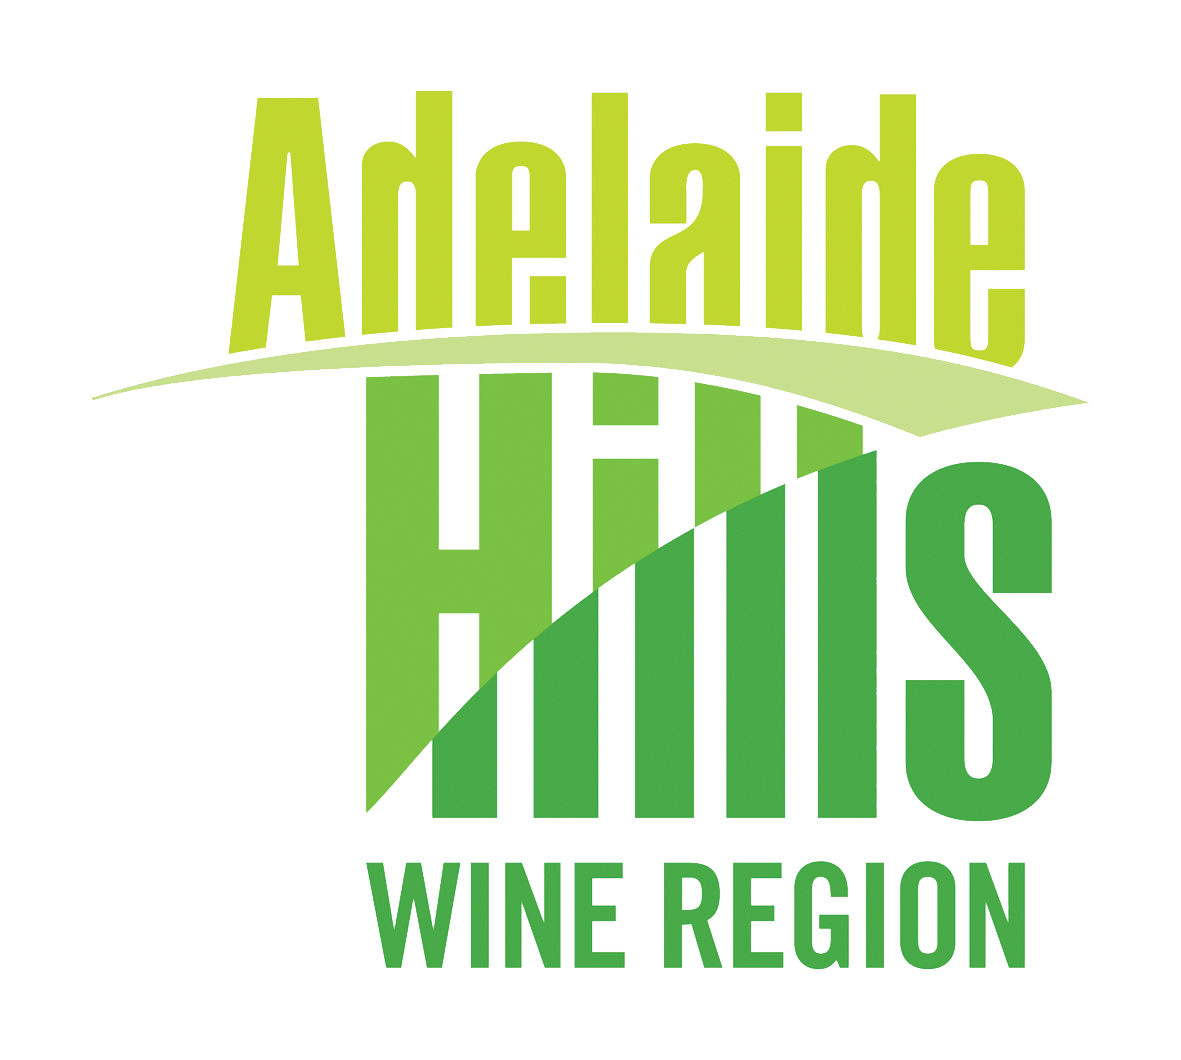 Adelaide Hills Visitor Centre